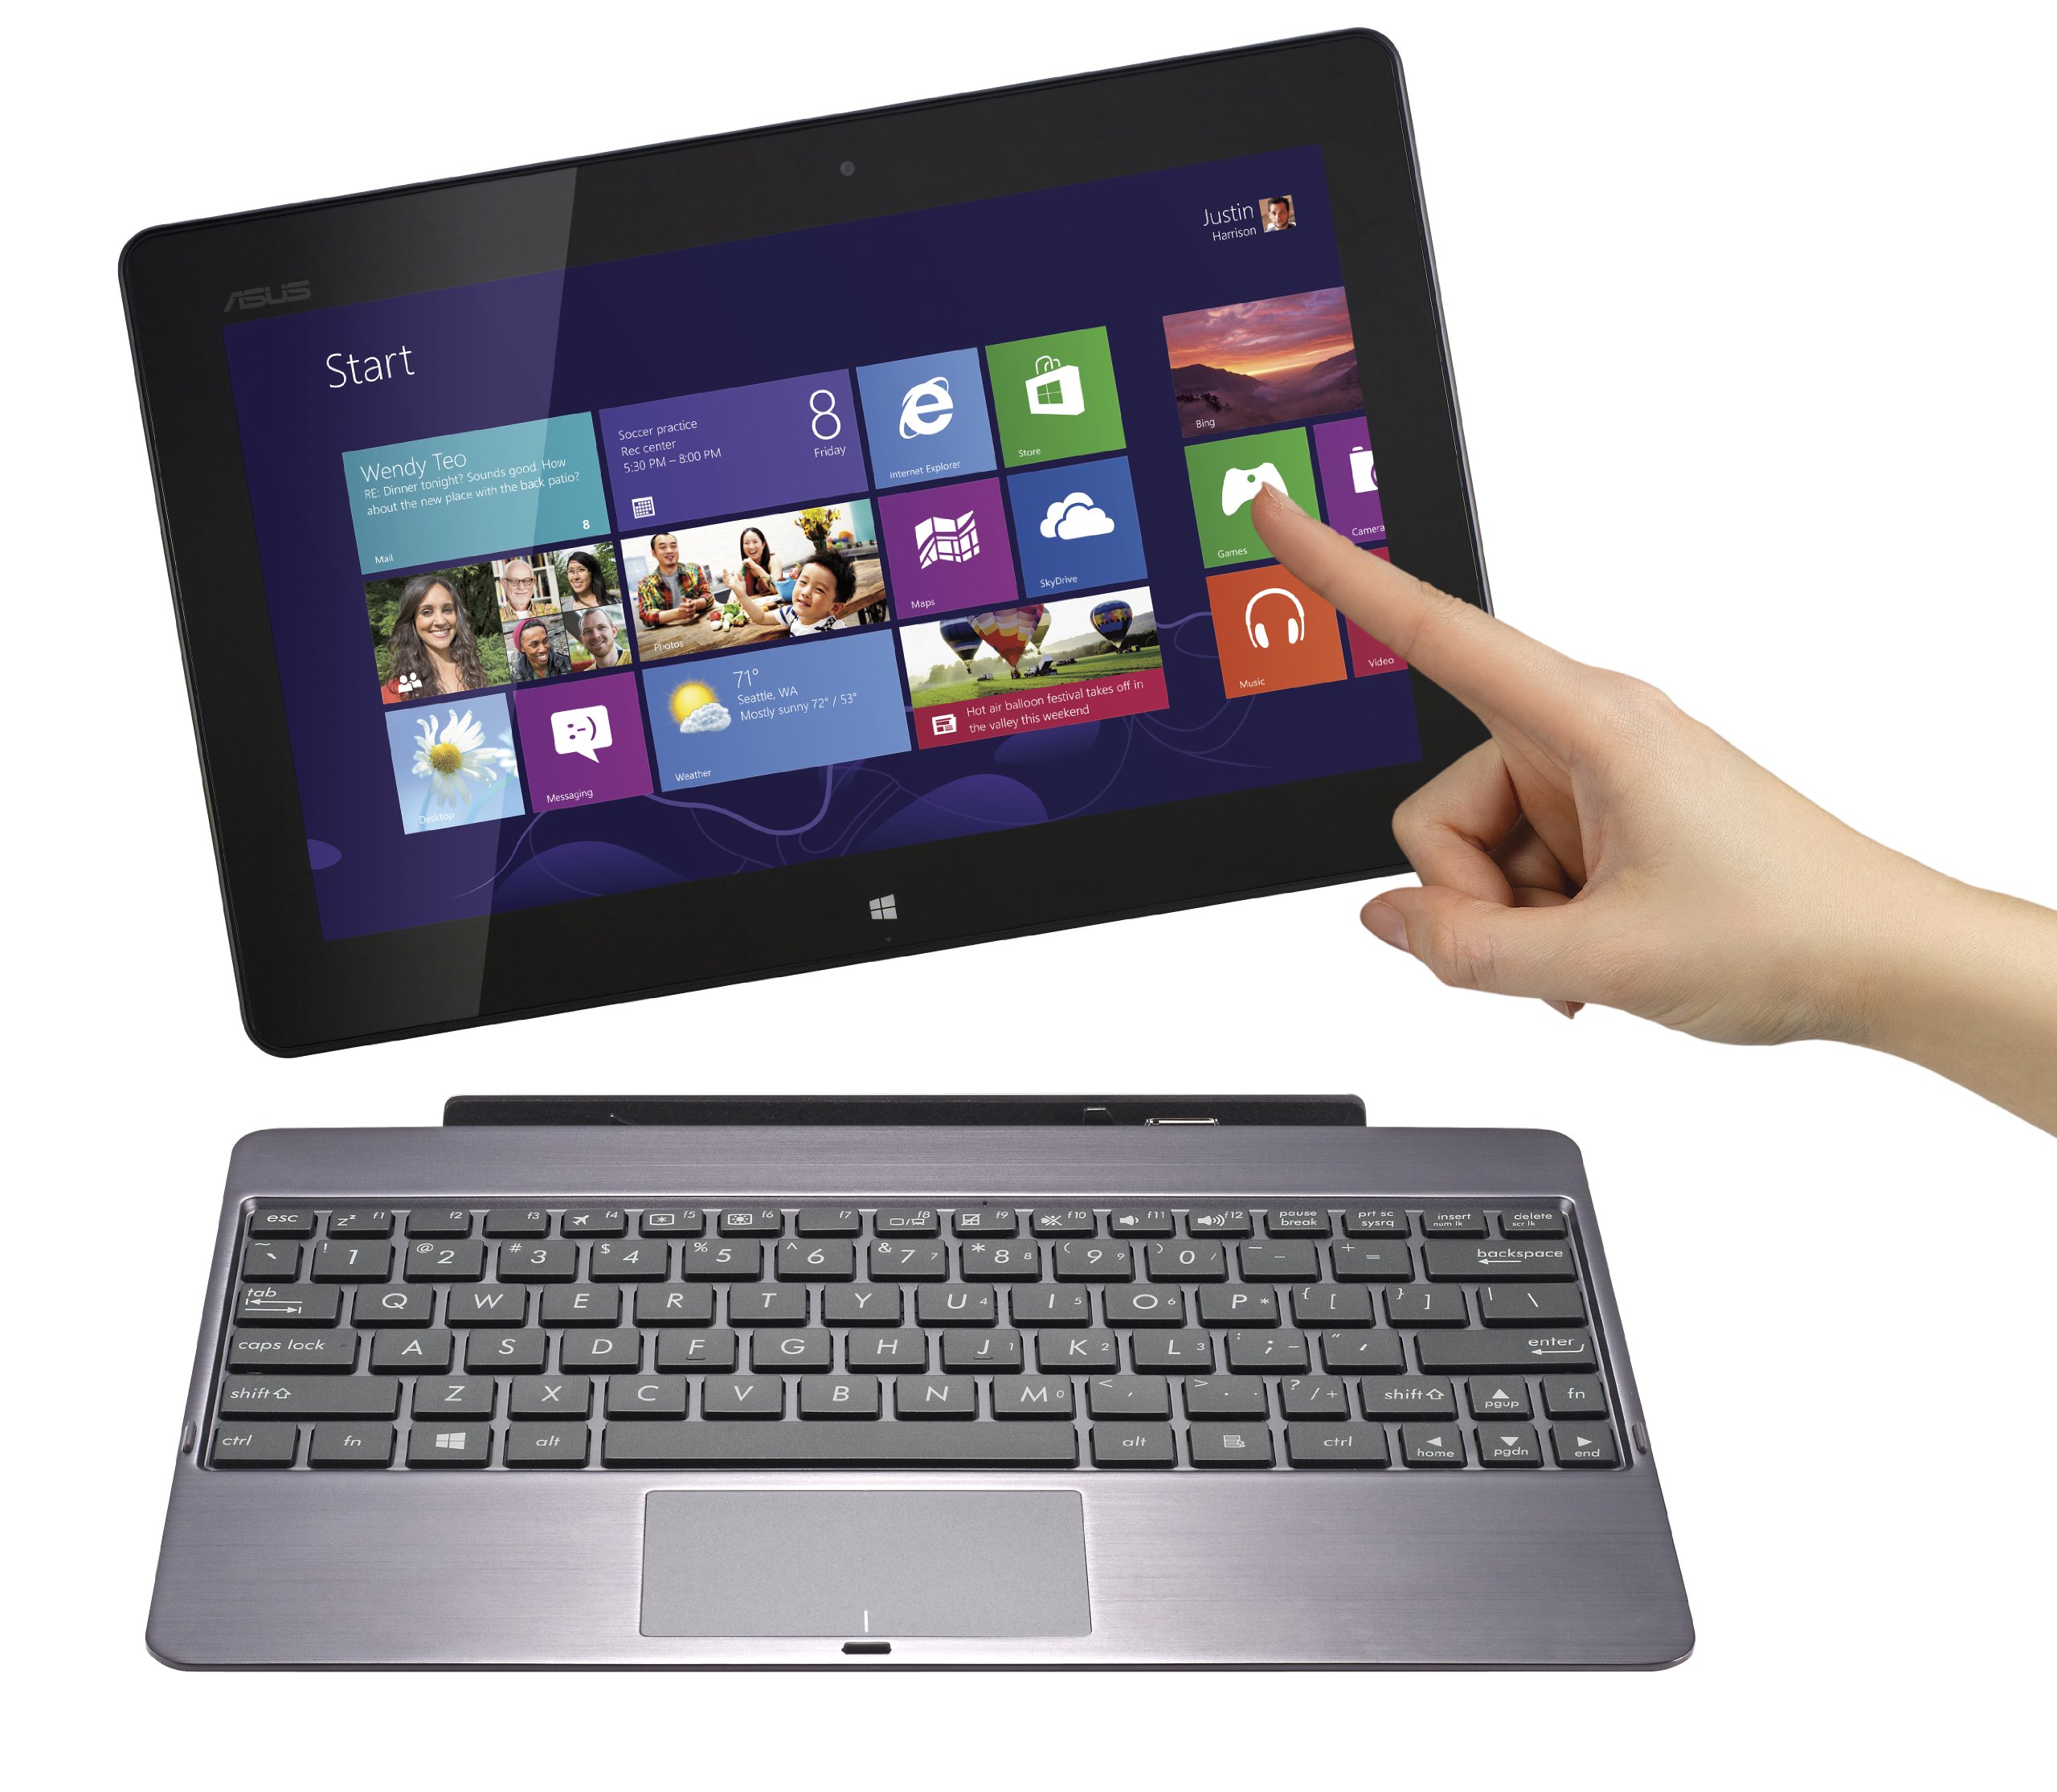 ASUS VivoTab RT TF600T-B1-GR 10.1-Inch 32 GB Tablet (Gray) 2012 Model